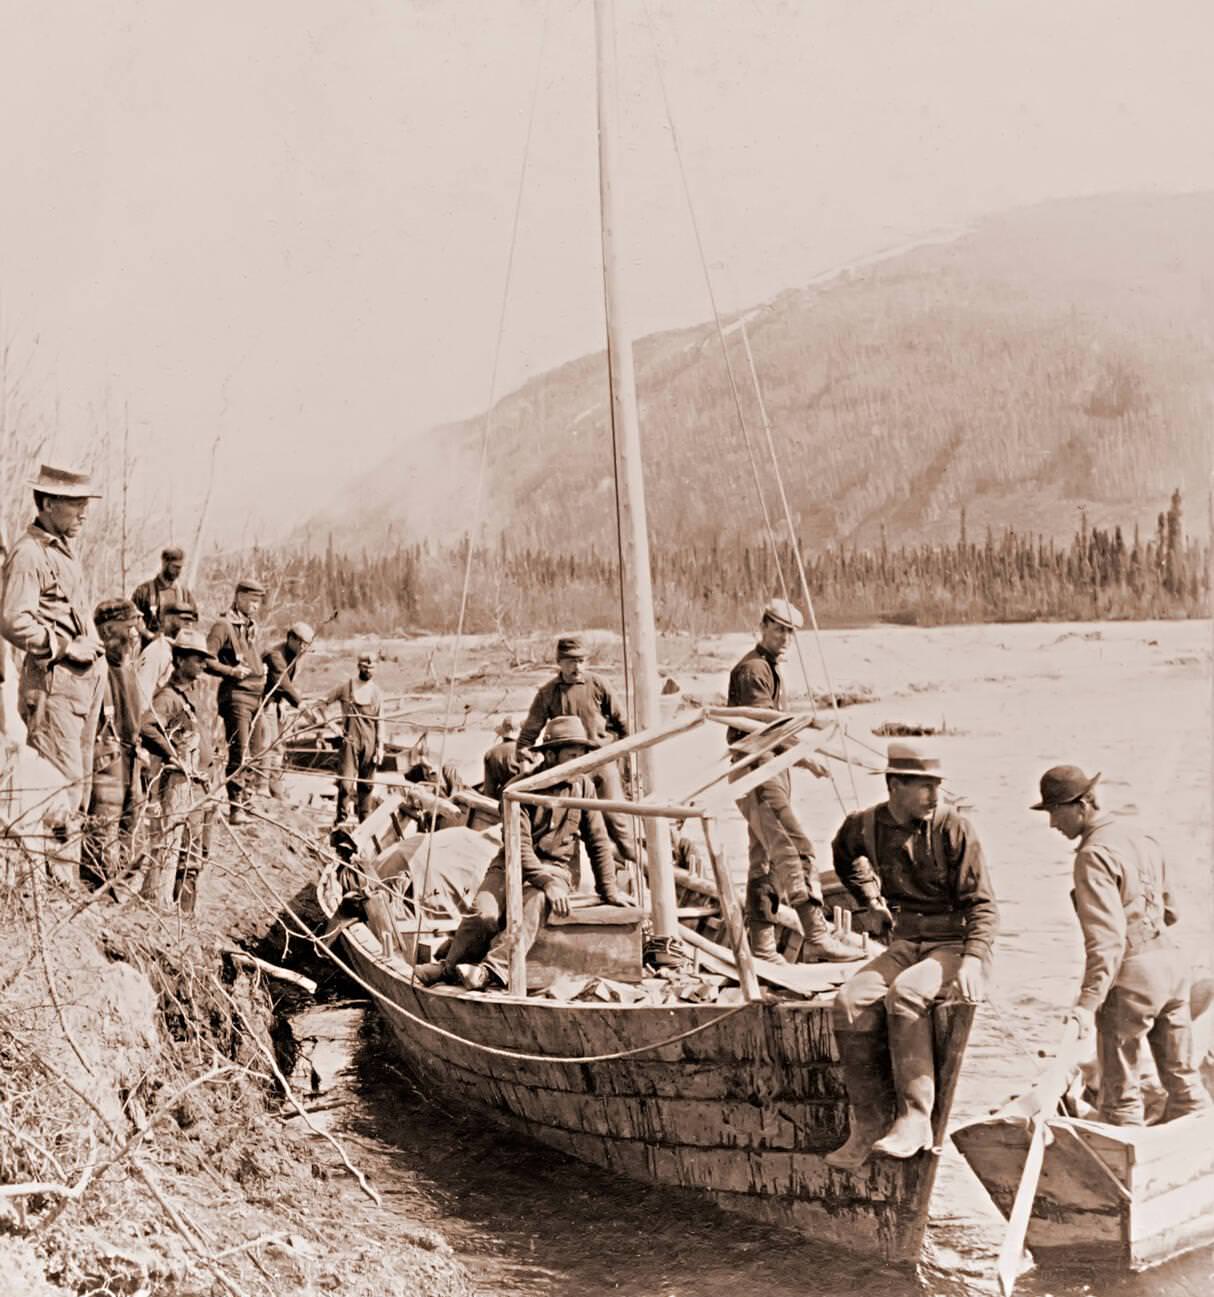 Gold prospectors beginning their 1400-mile journey home from Alaska, spring of 1899.